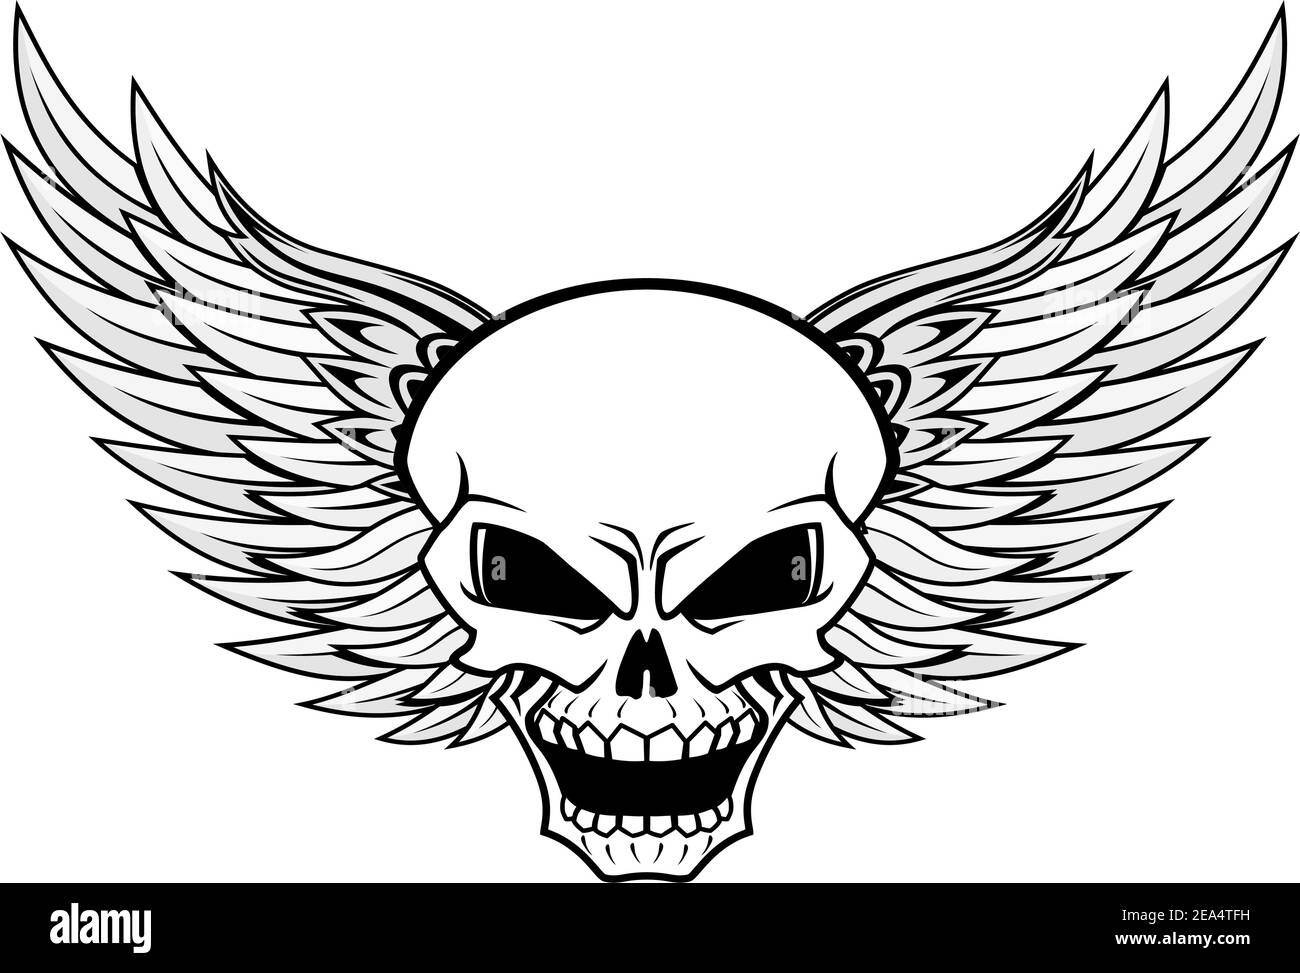 Art Surreal Couple Fairy and Angel Skull Tattoo Stock Illustration   Illustration of evil human 201421341